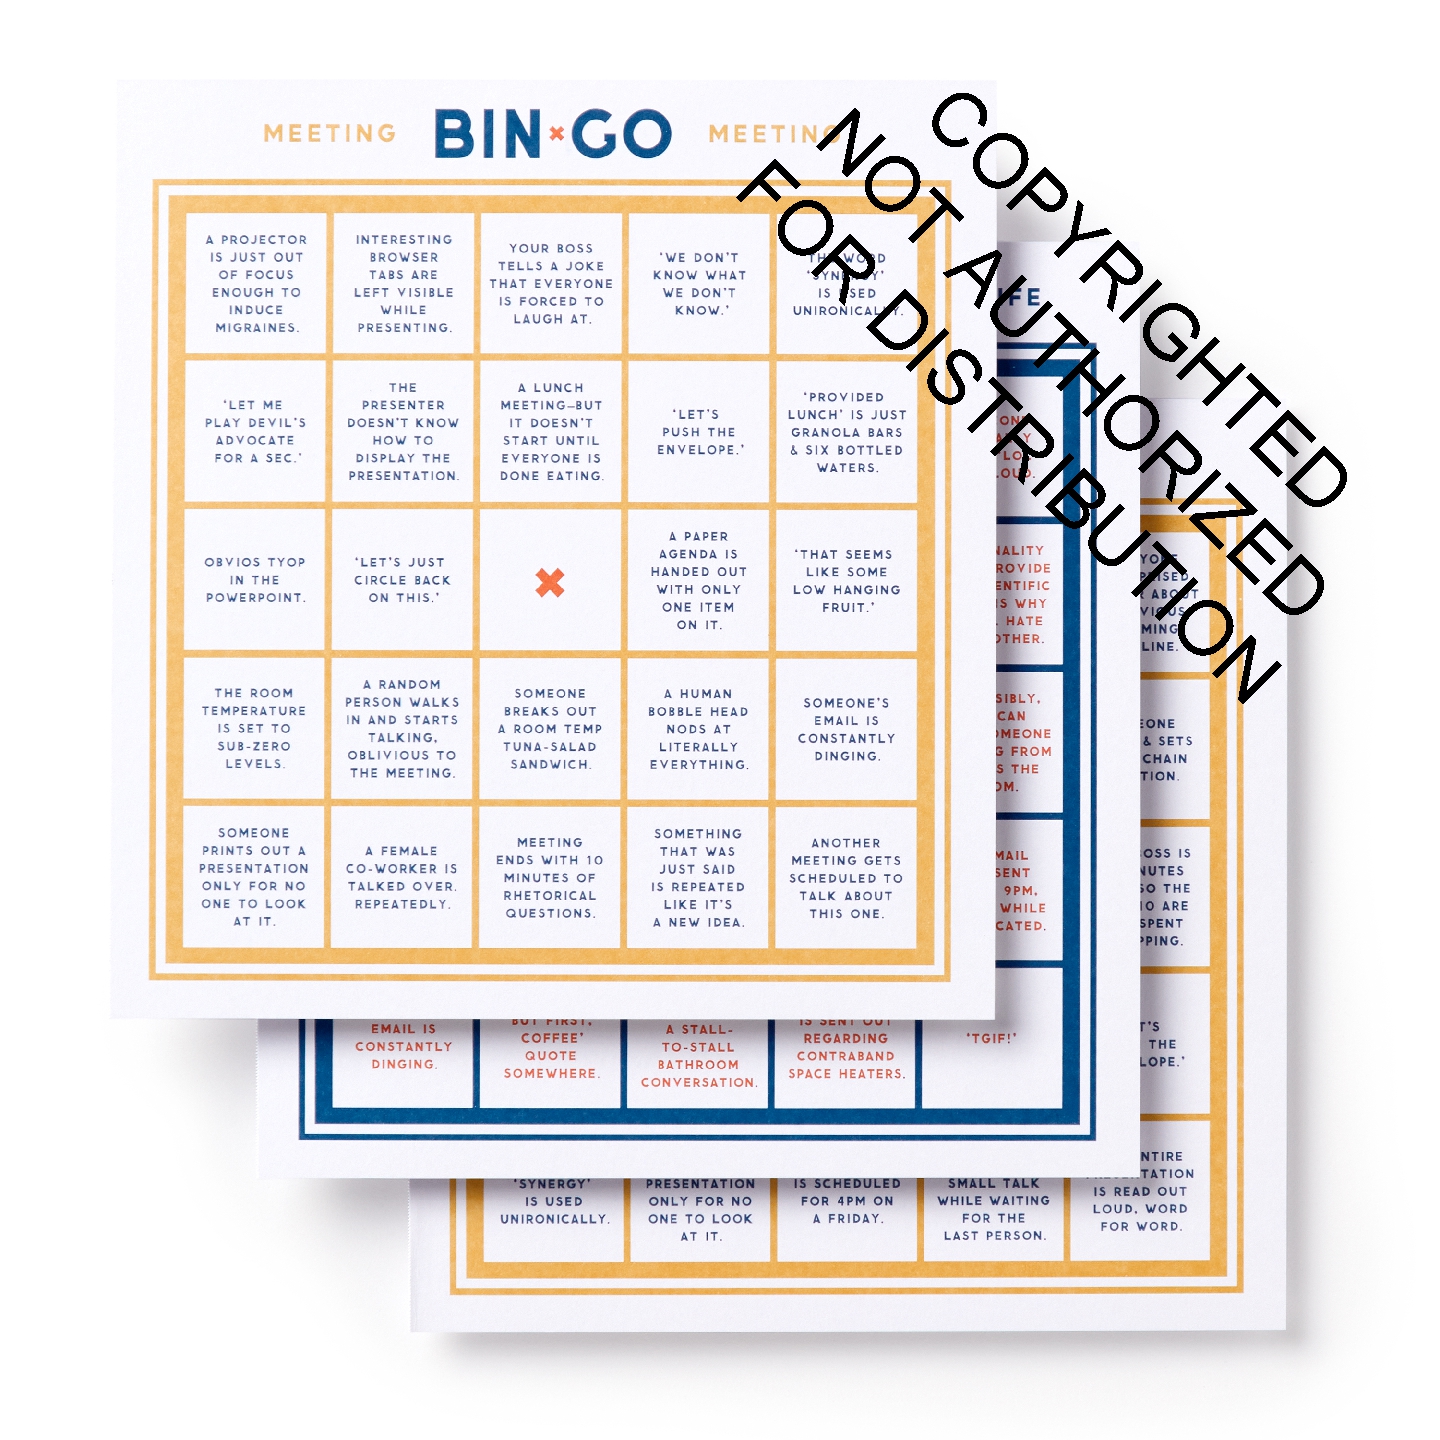 Bin-go To A Dumb Meeting Bingo book